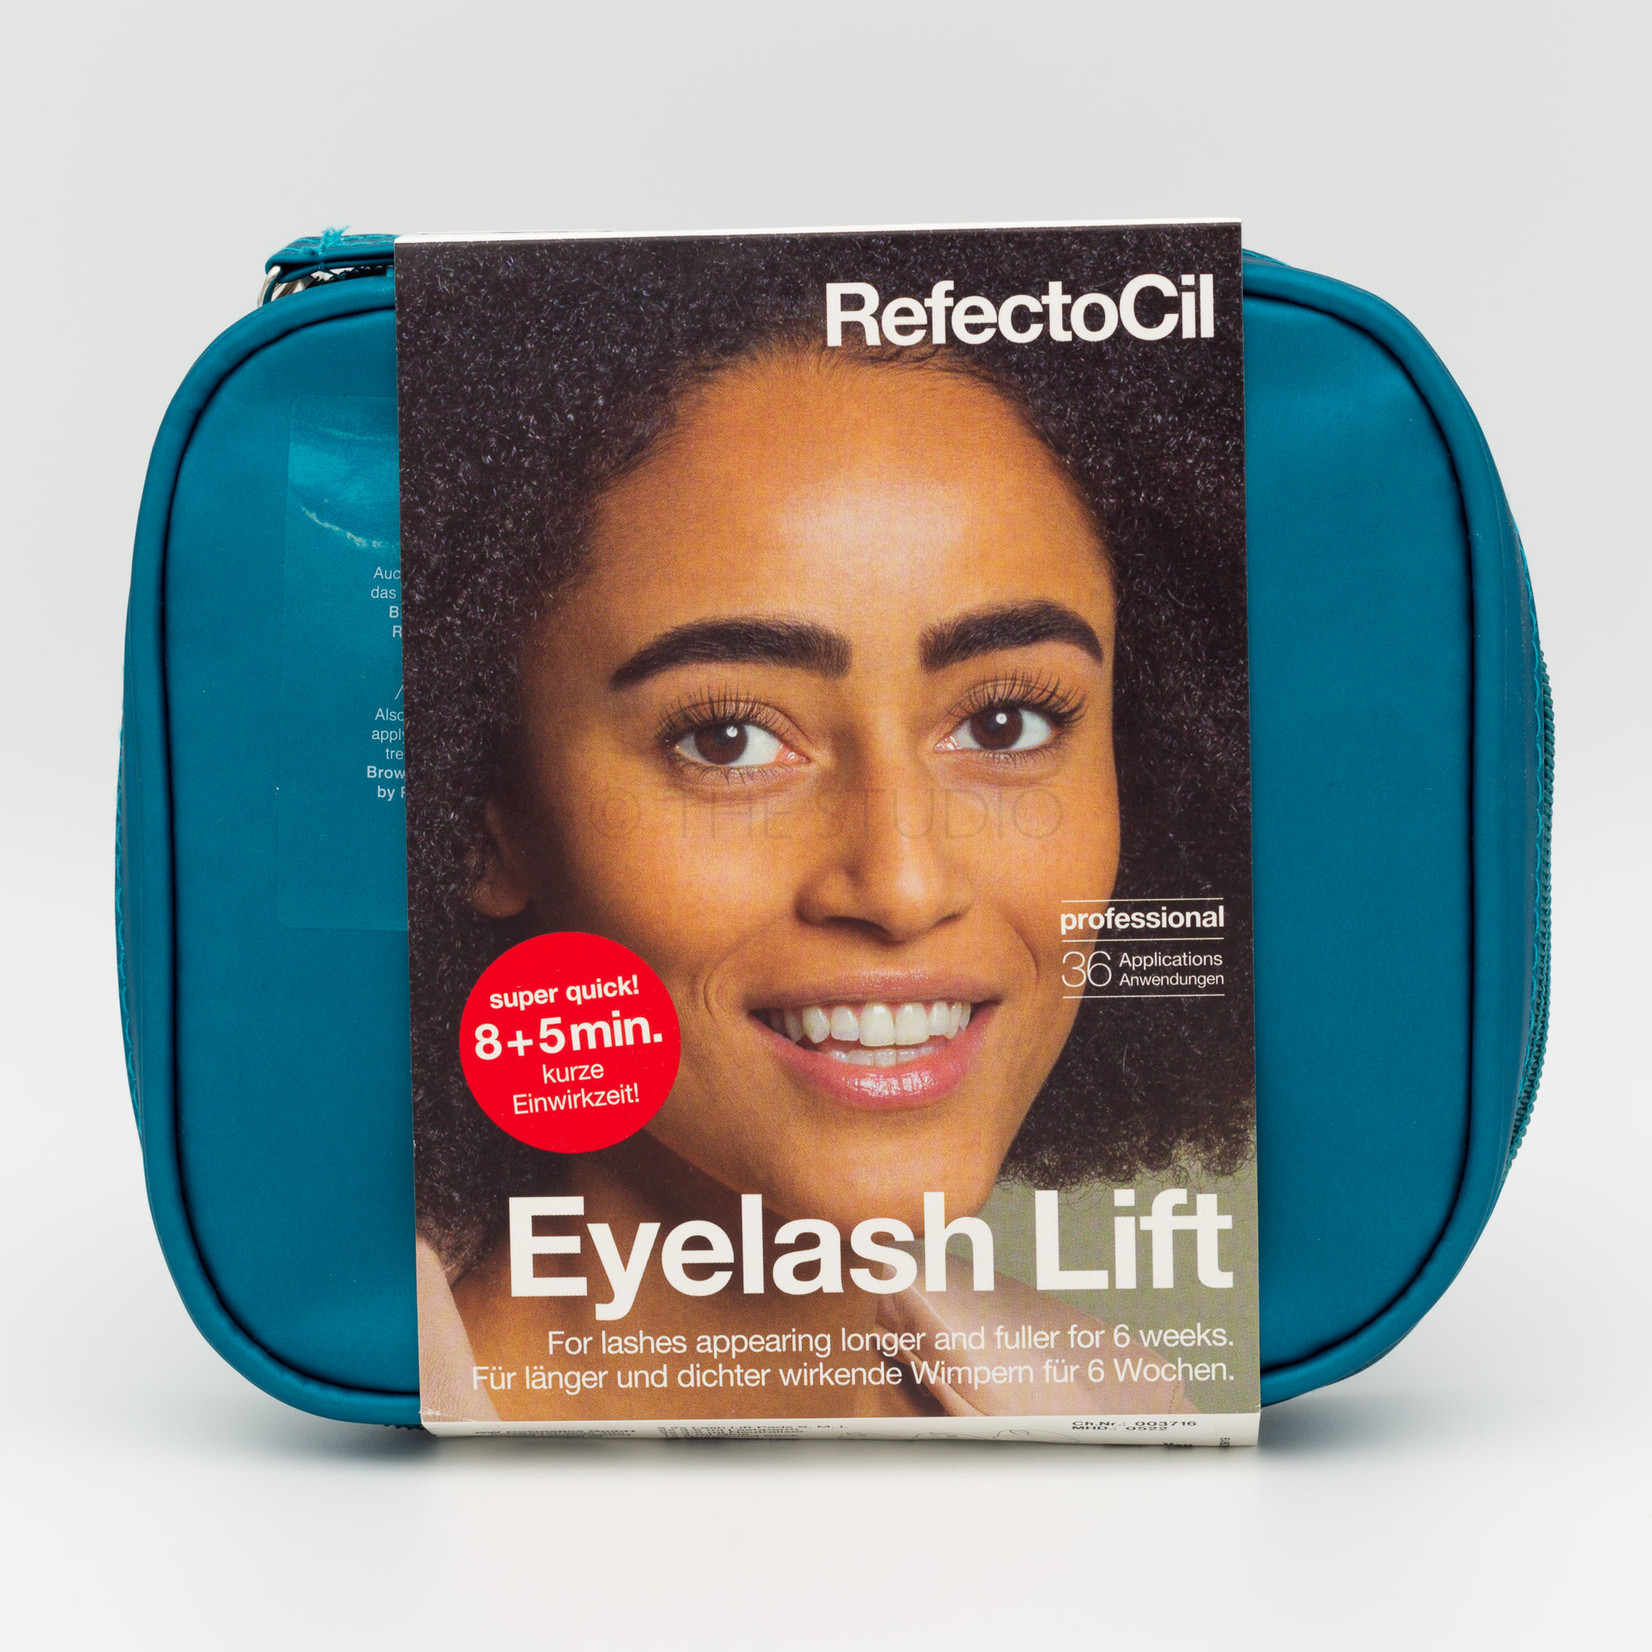 RefectoCil RefectoCil - Eyelash Lift - 36 Applications